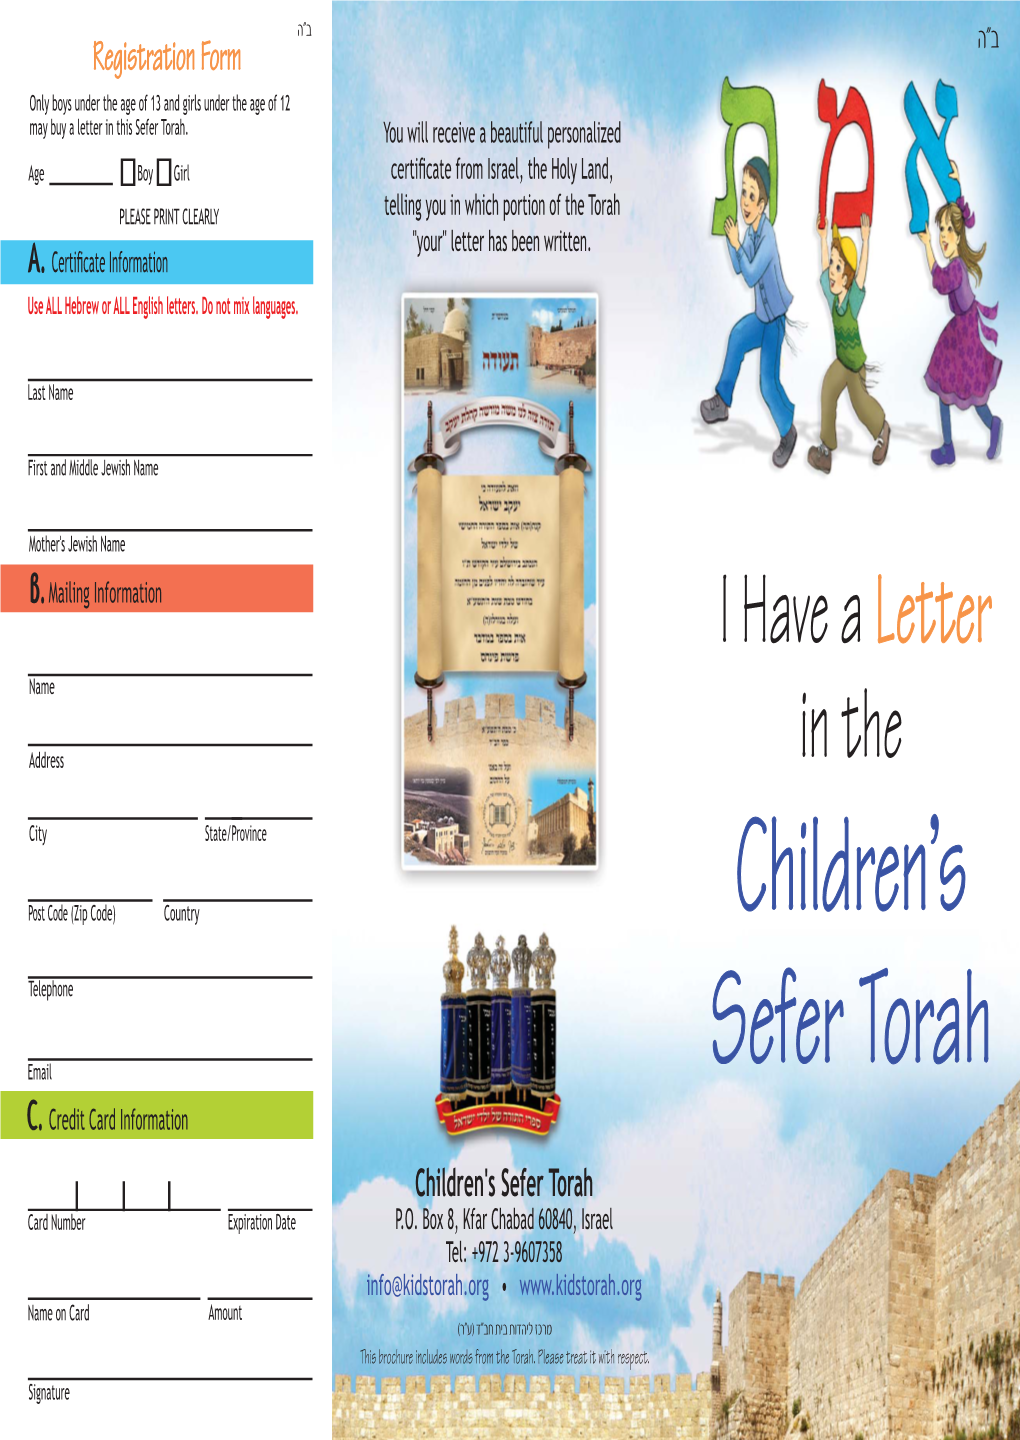 Children's Sefer Torah Card Number Expiration Date P.O